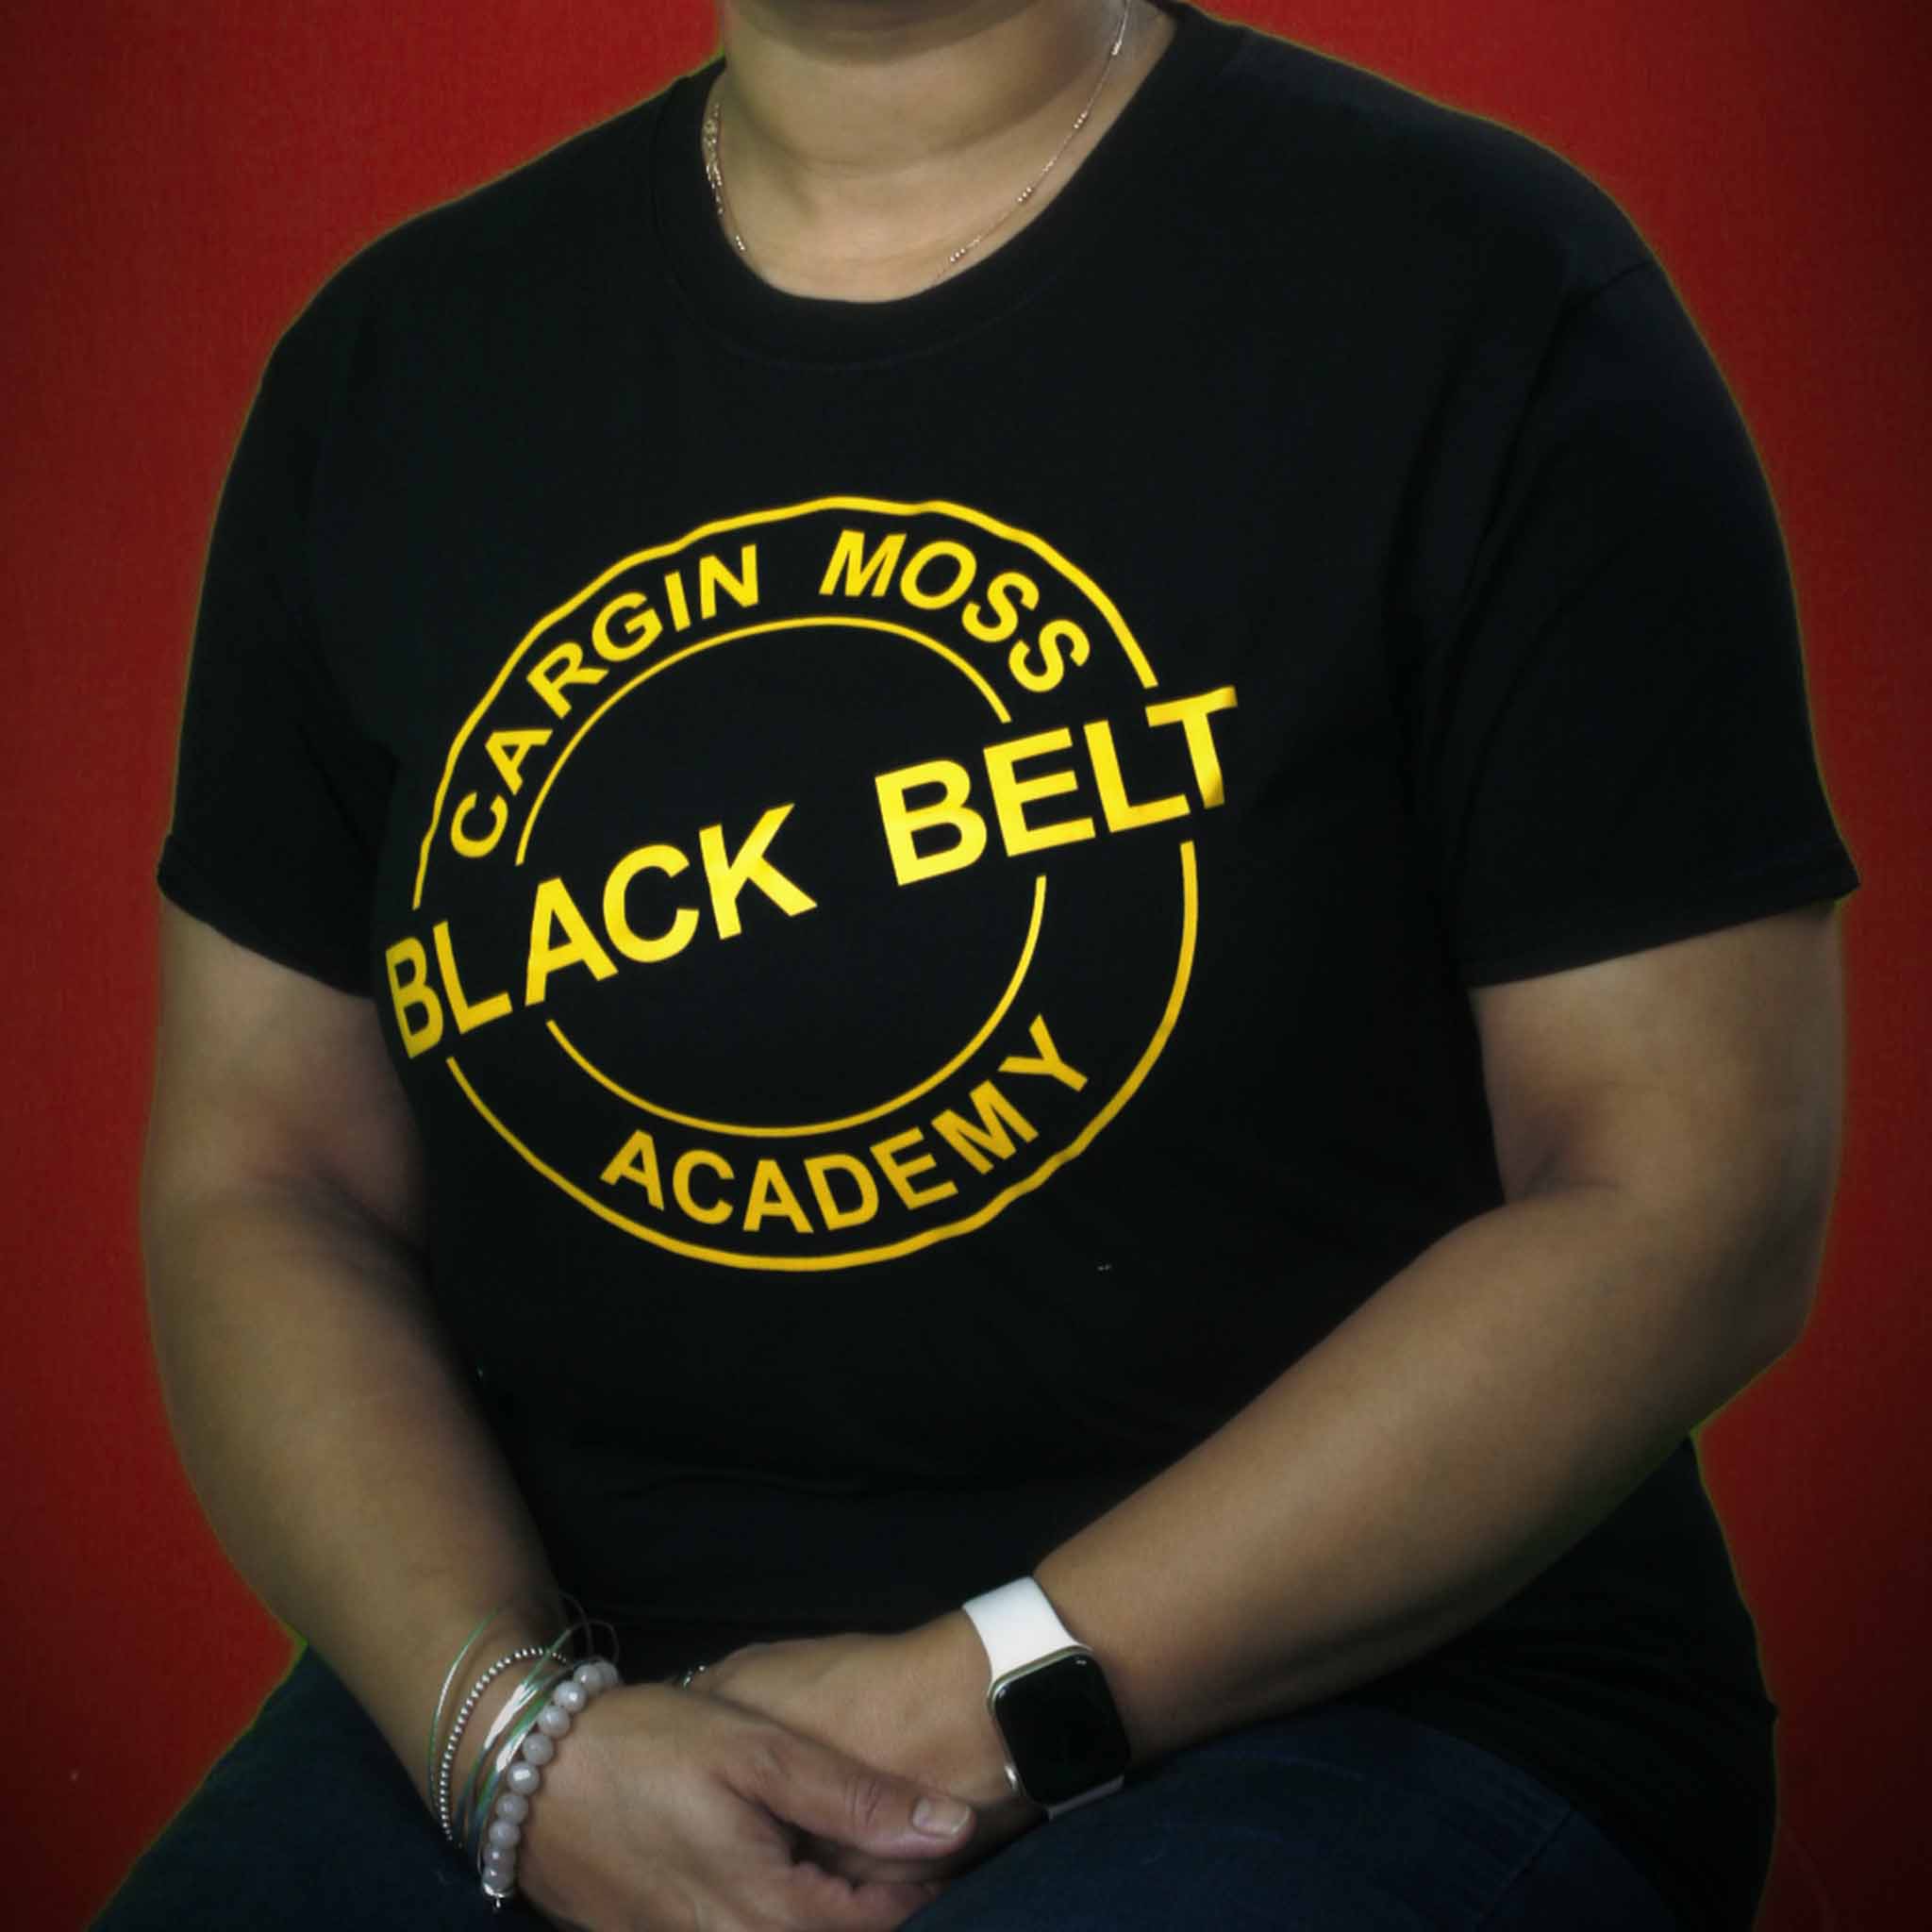 martial arts club black tee shirt with the cmbba logo emblem